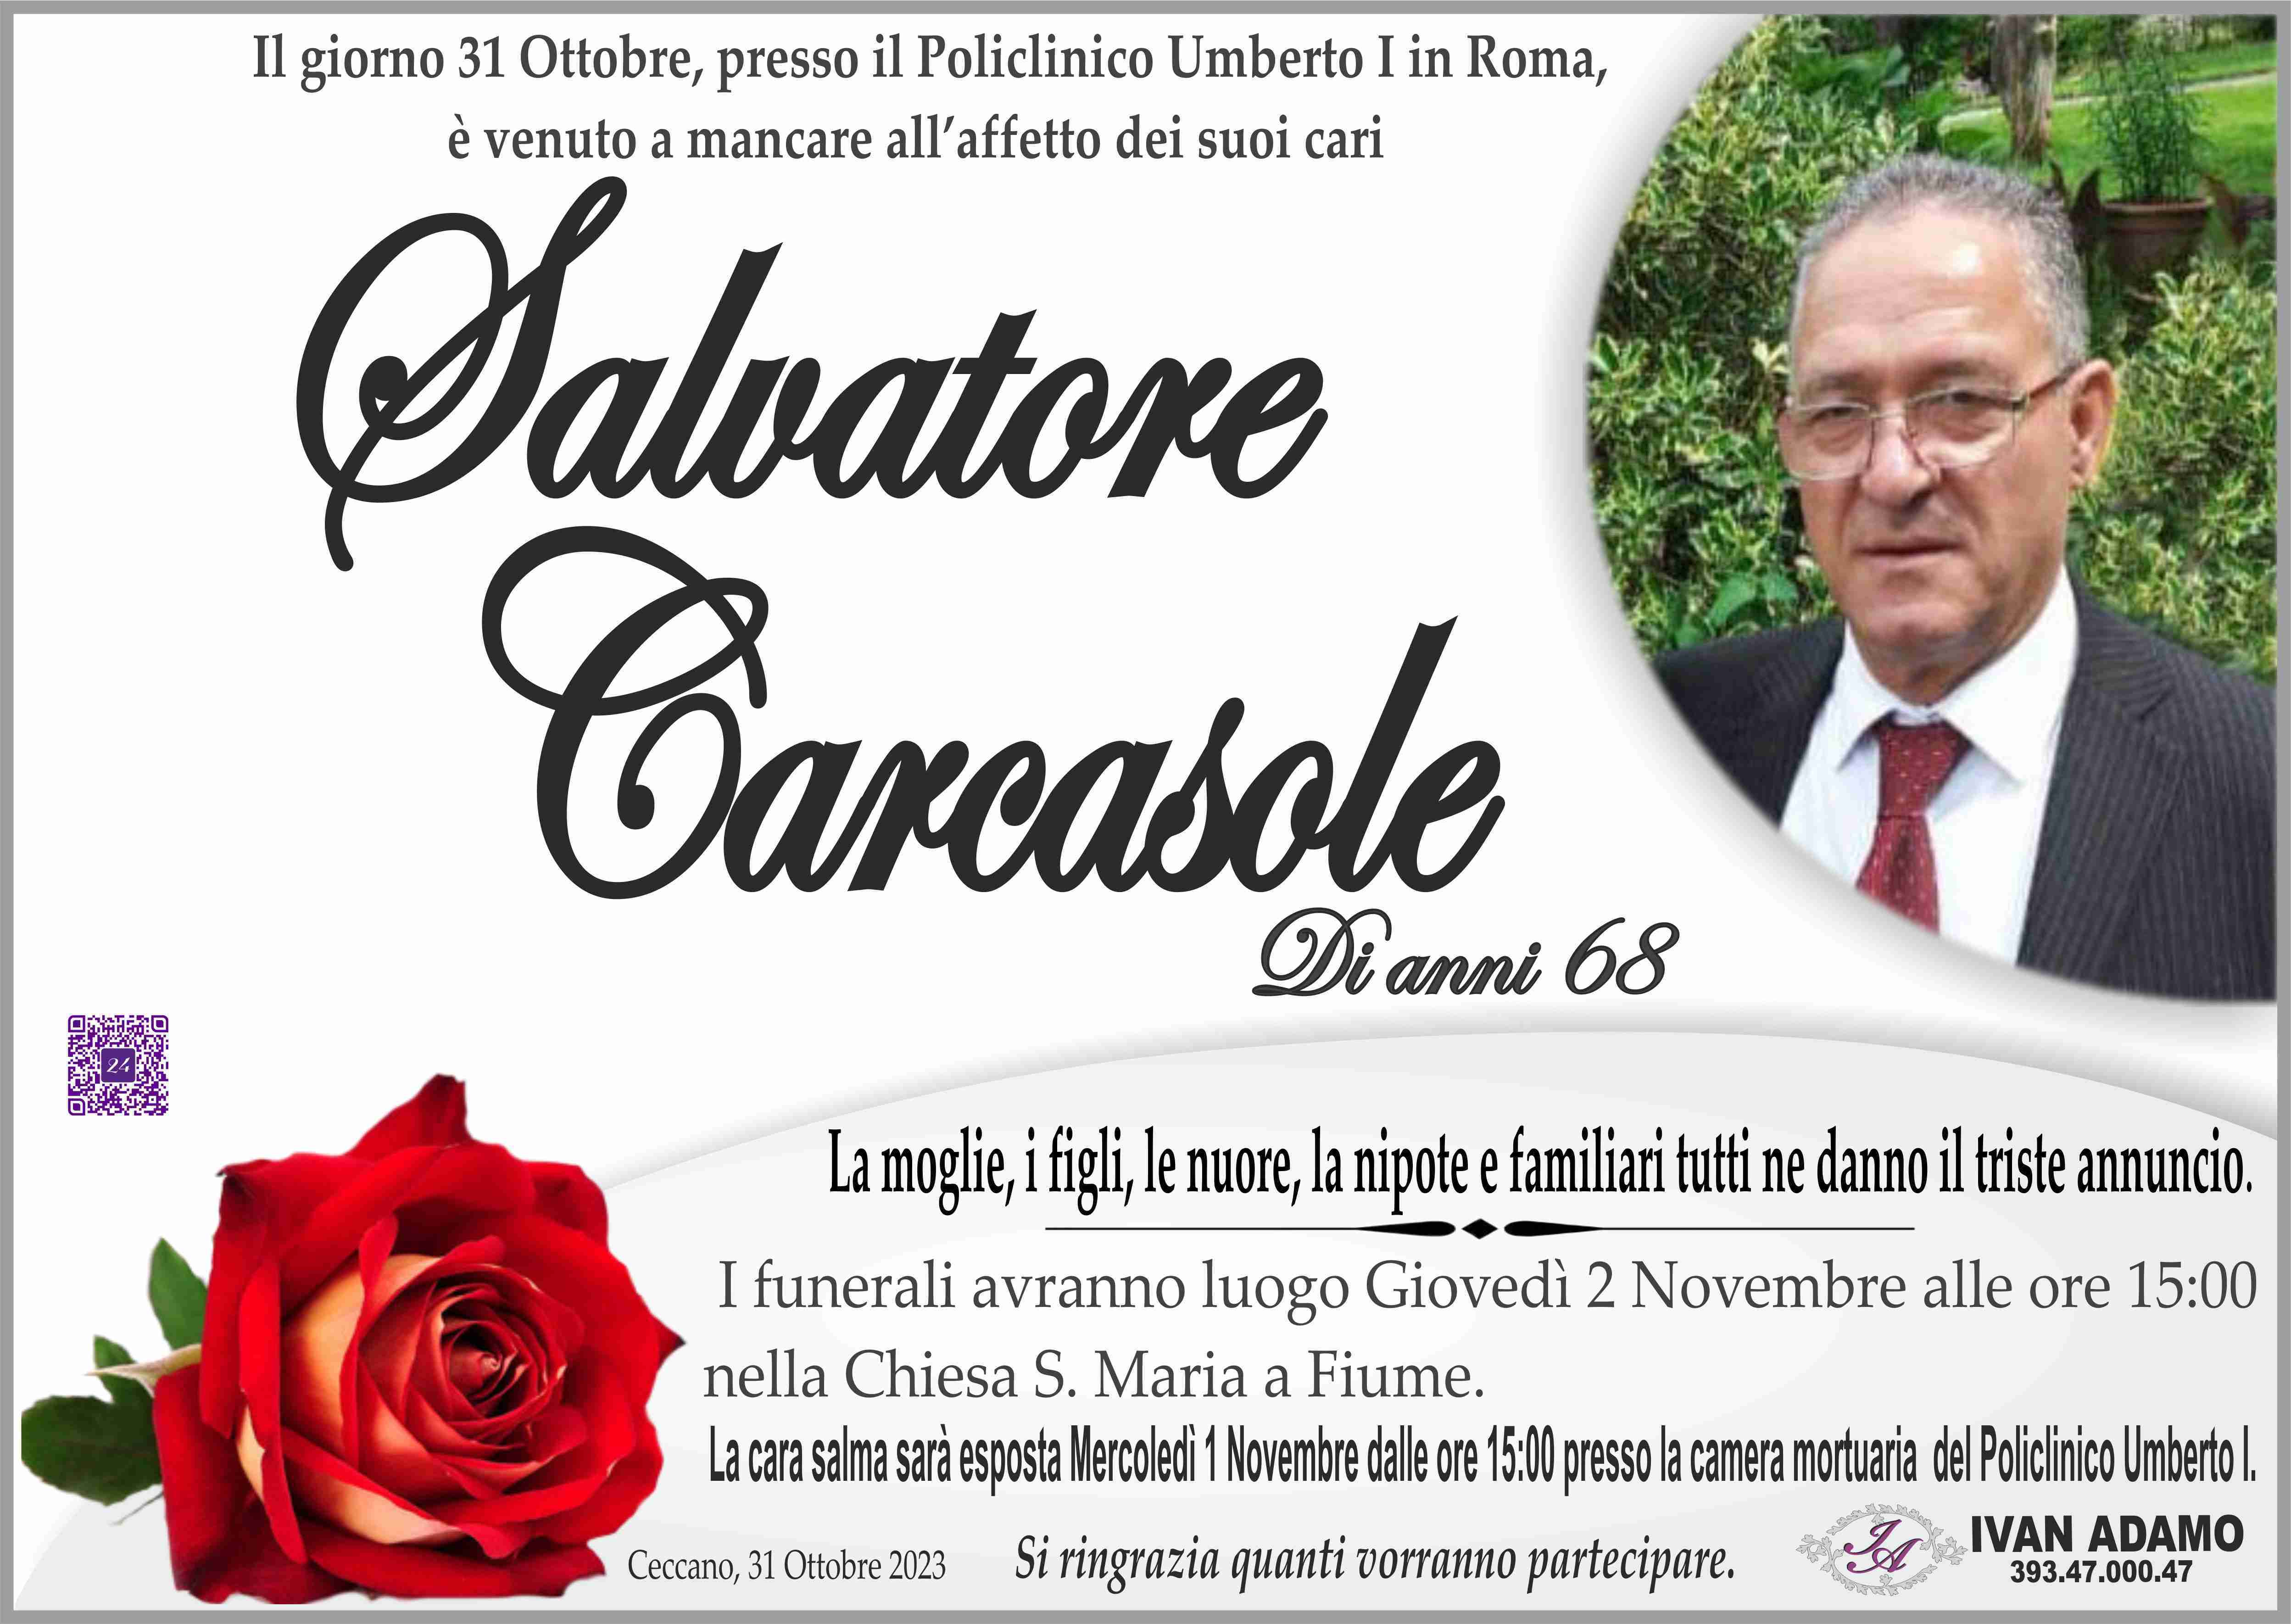 Salvatore Carcasole